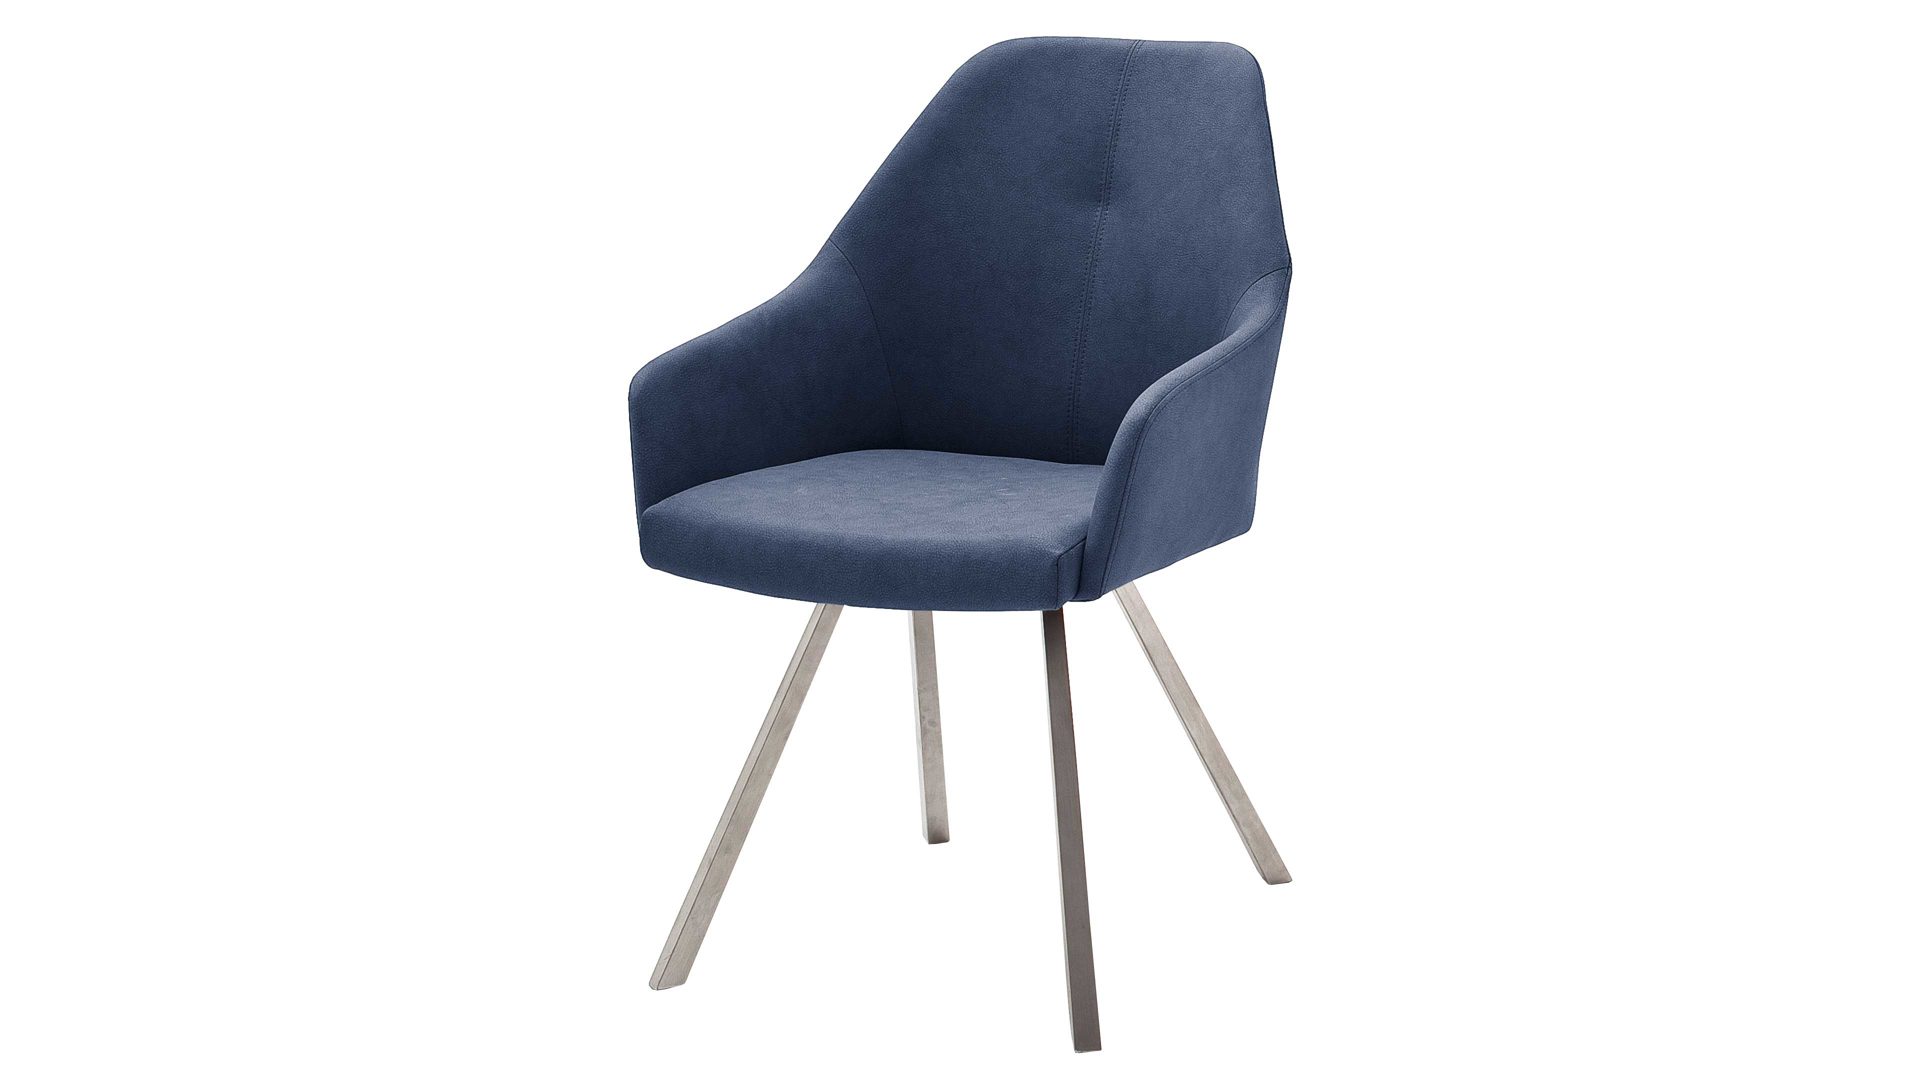 Vierfußstuhl Mca furniture aus Stoff in Blau Armlehn-Vierfußstuhl Madita Rücken A, eckige Edelstahlfüße - Nachtblau